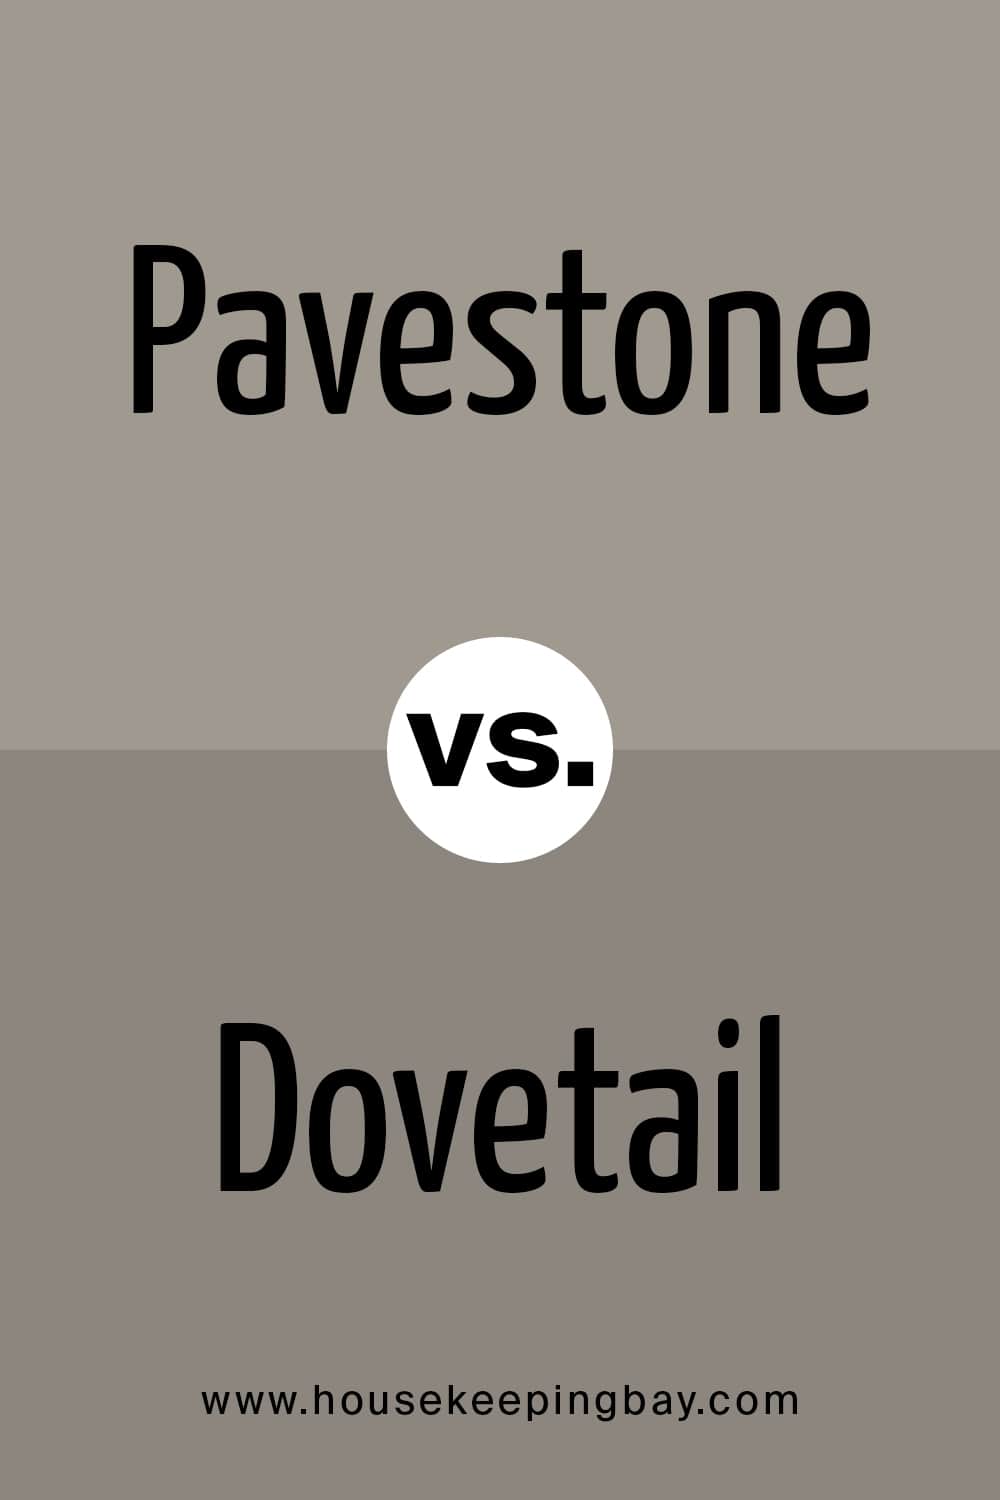 Pavestone VS Dovetail